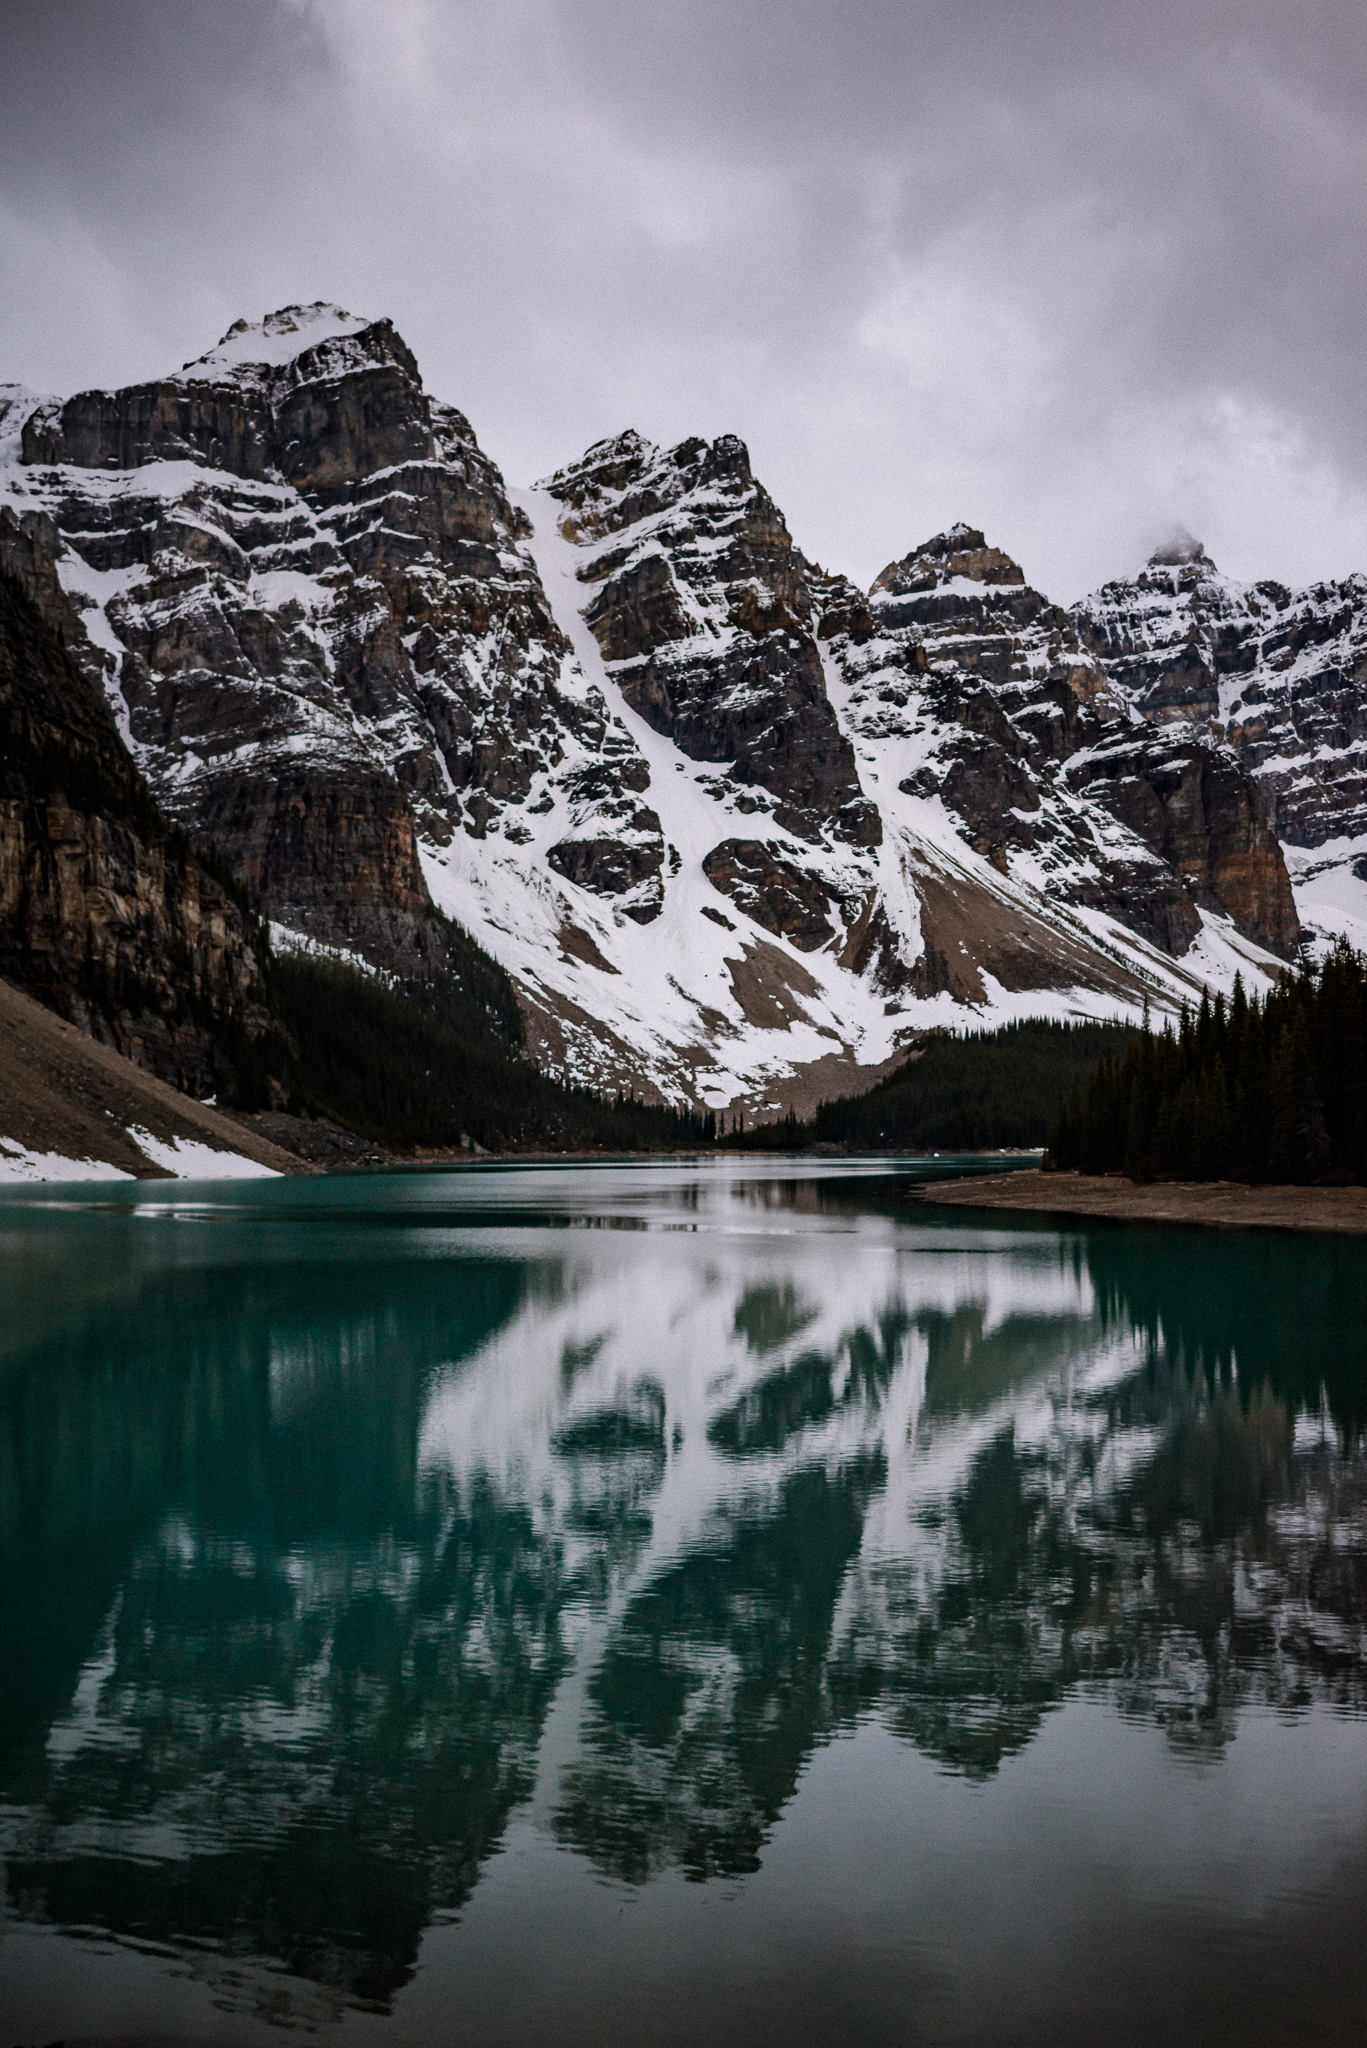 Mountains reflecting on water at Moraine Lake, Alberta